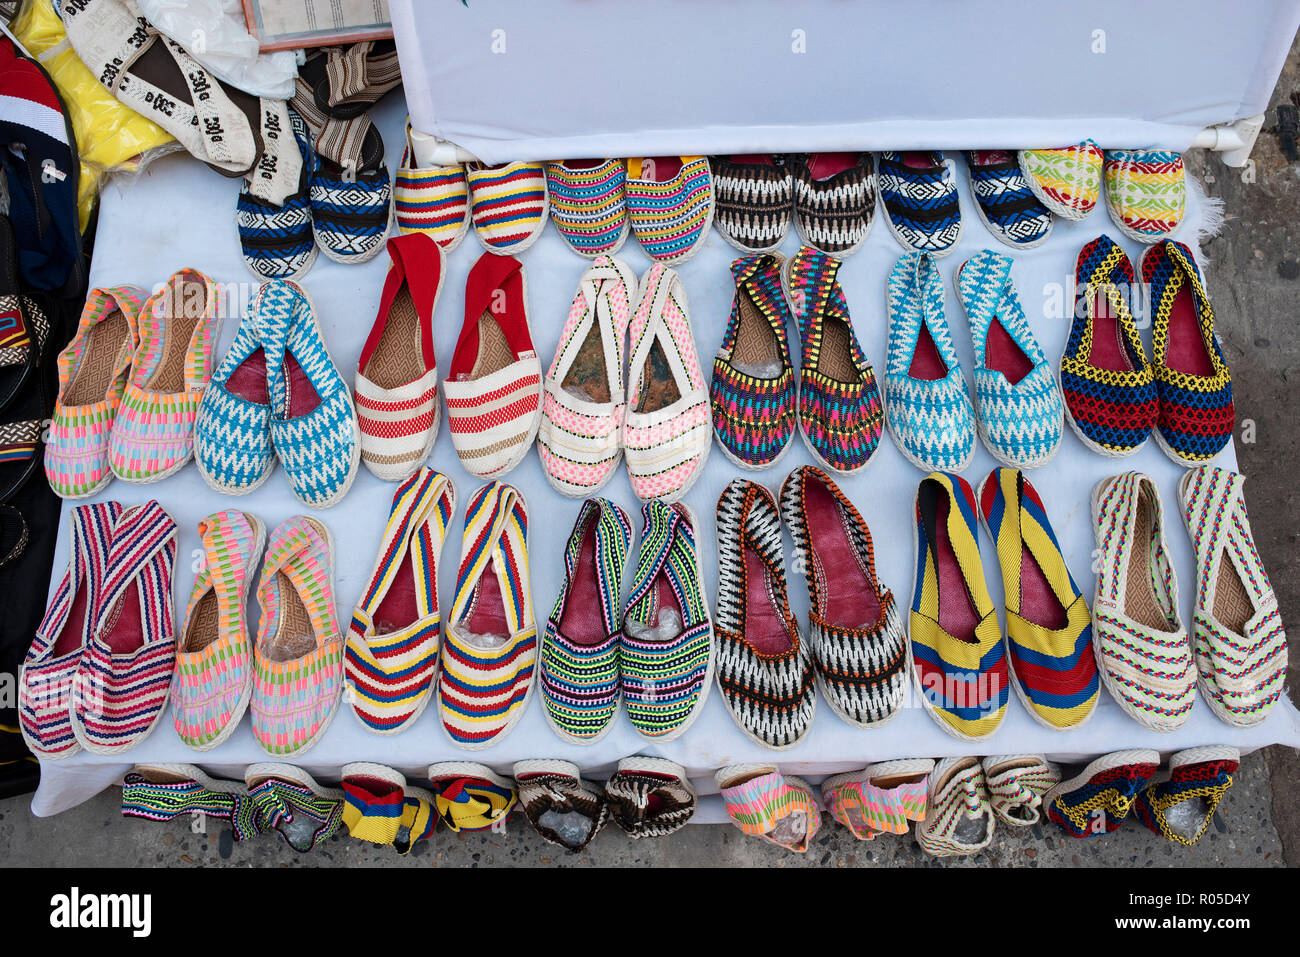 Estate a mano " espadrilles " (calzature) per la vendita in strada di Cartagena de Indias, Colombia. Ott 2018 Foto Stock